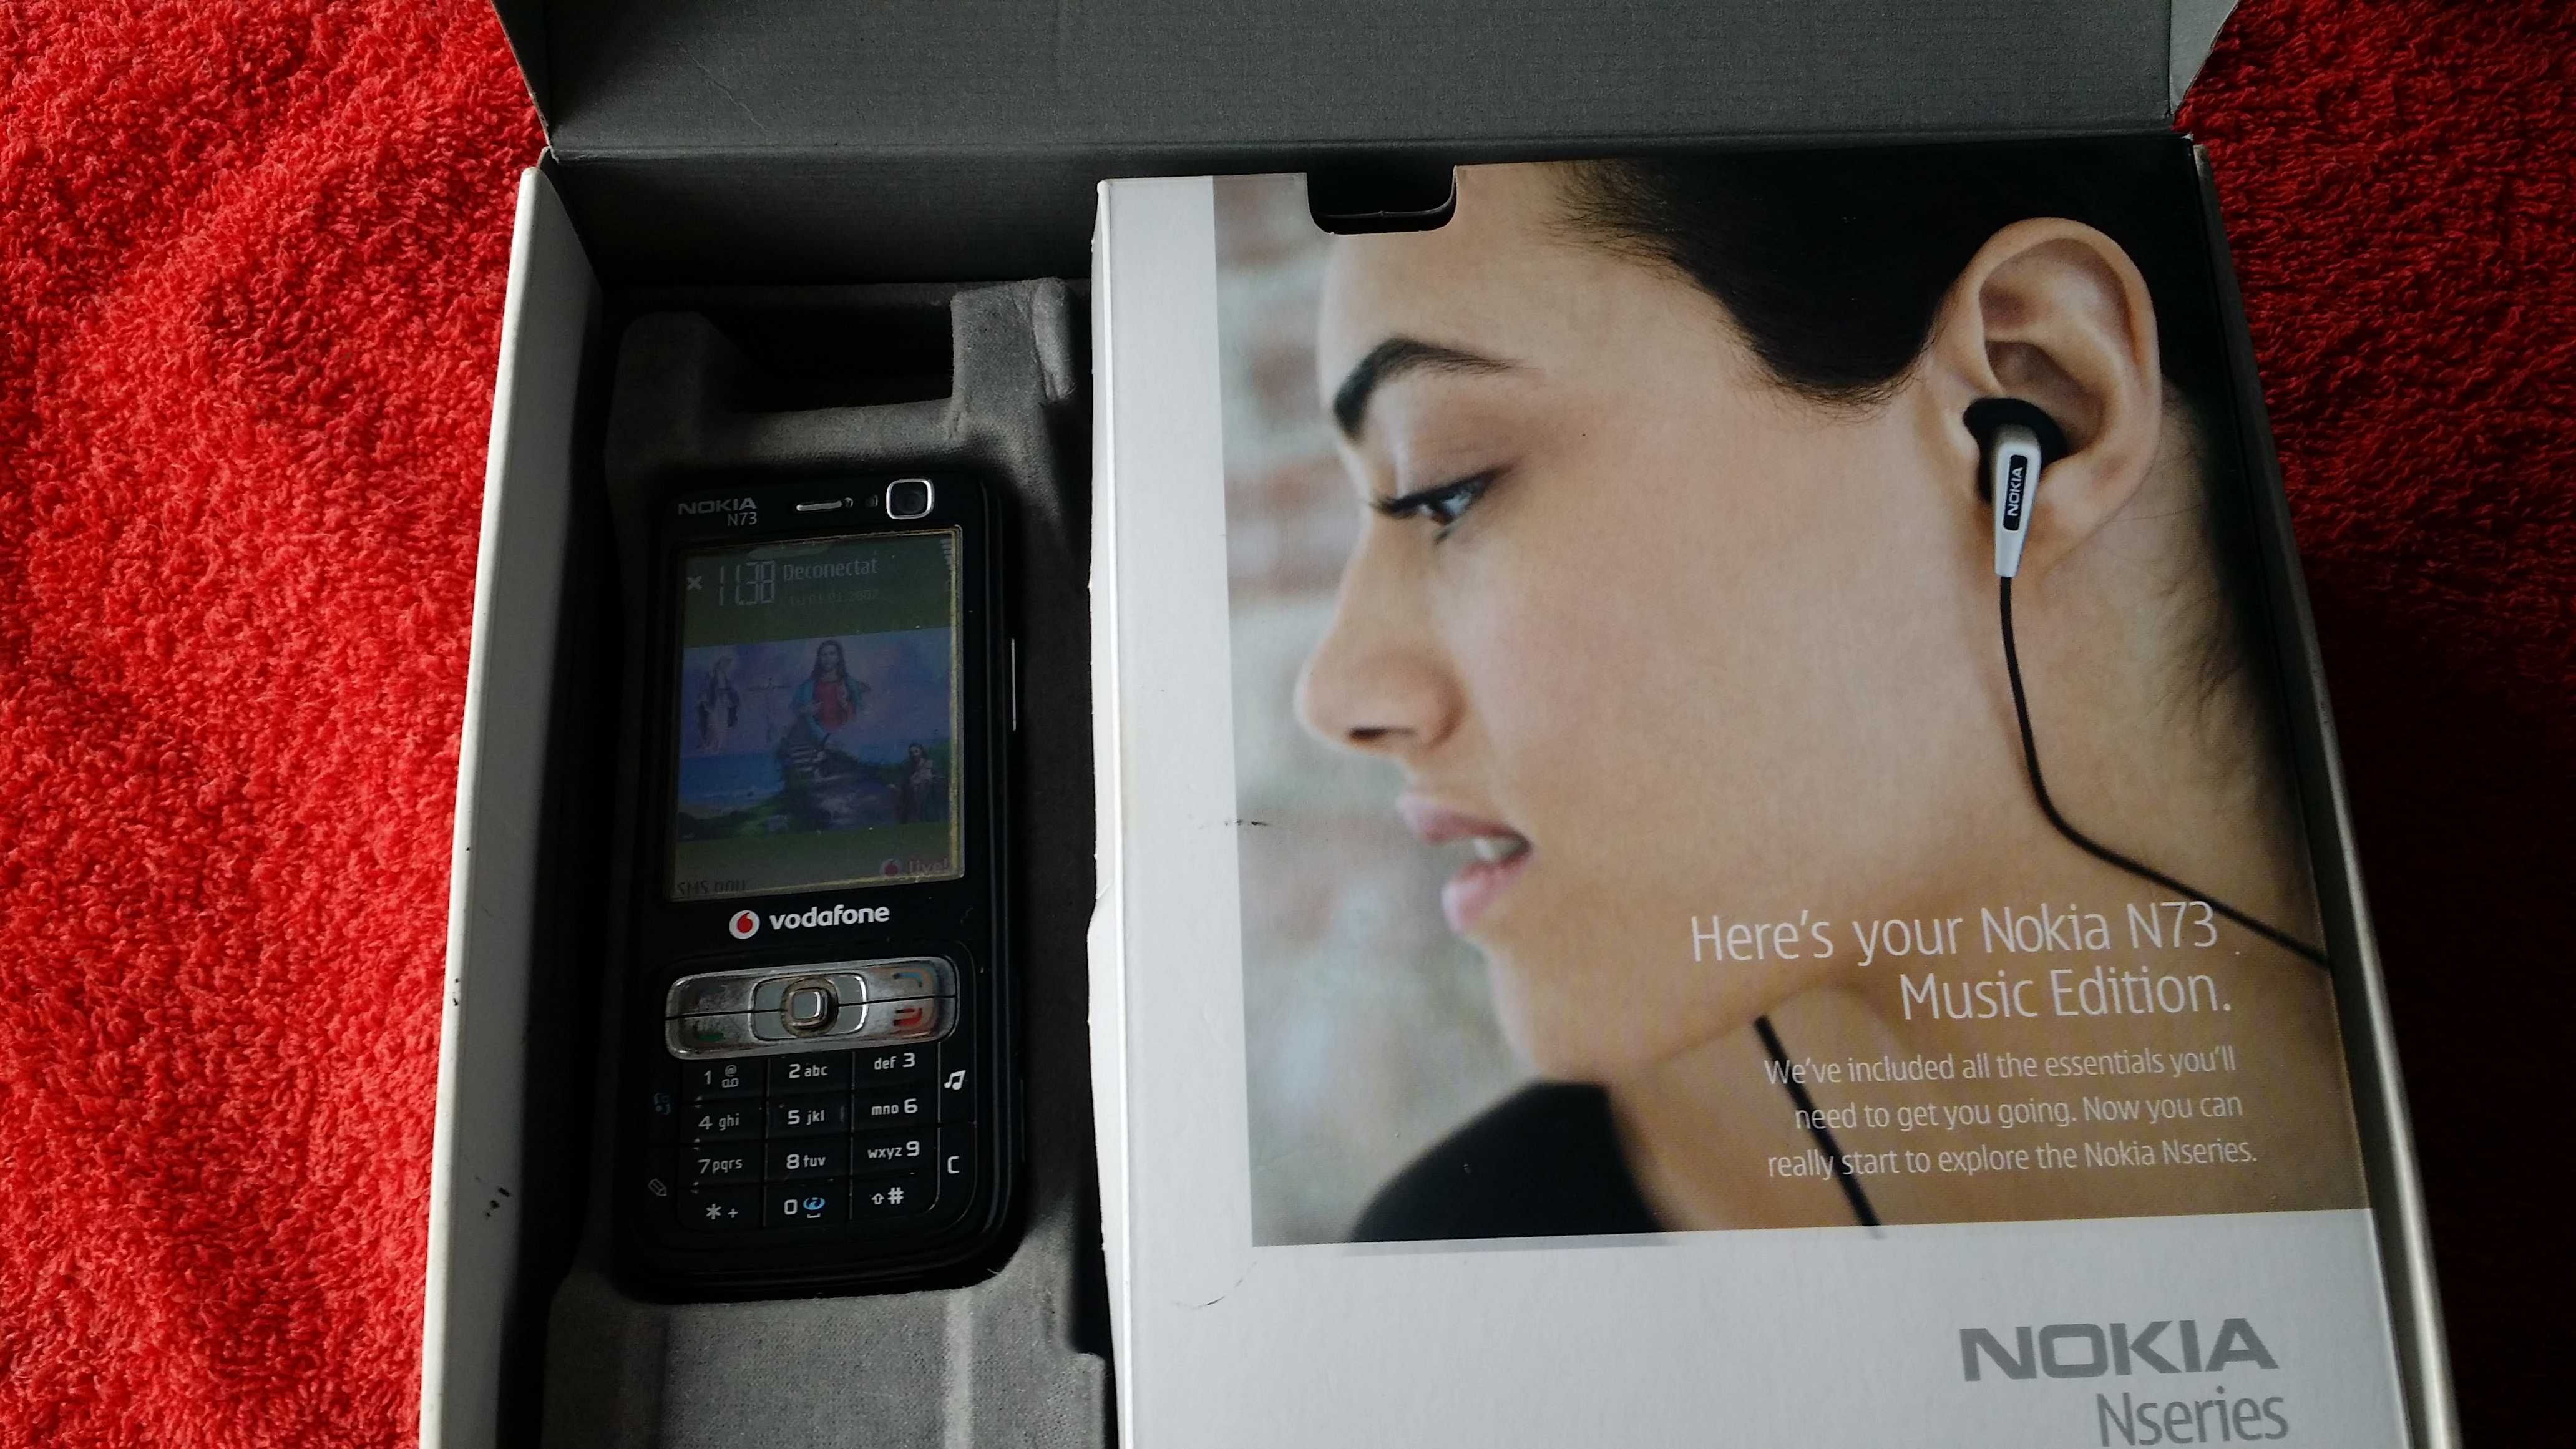 Telefon Nokia N 73 Music Edition